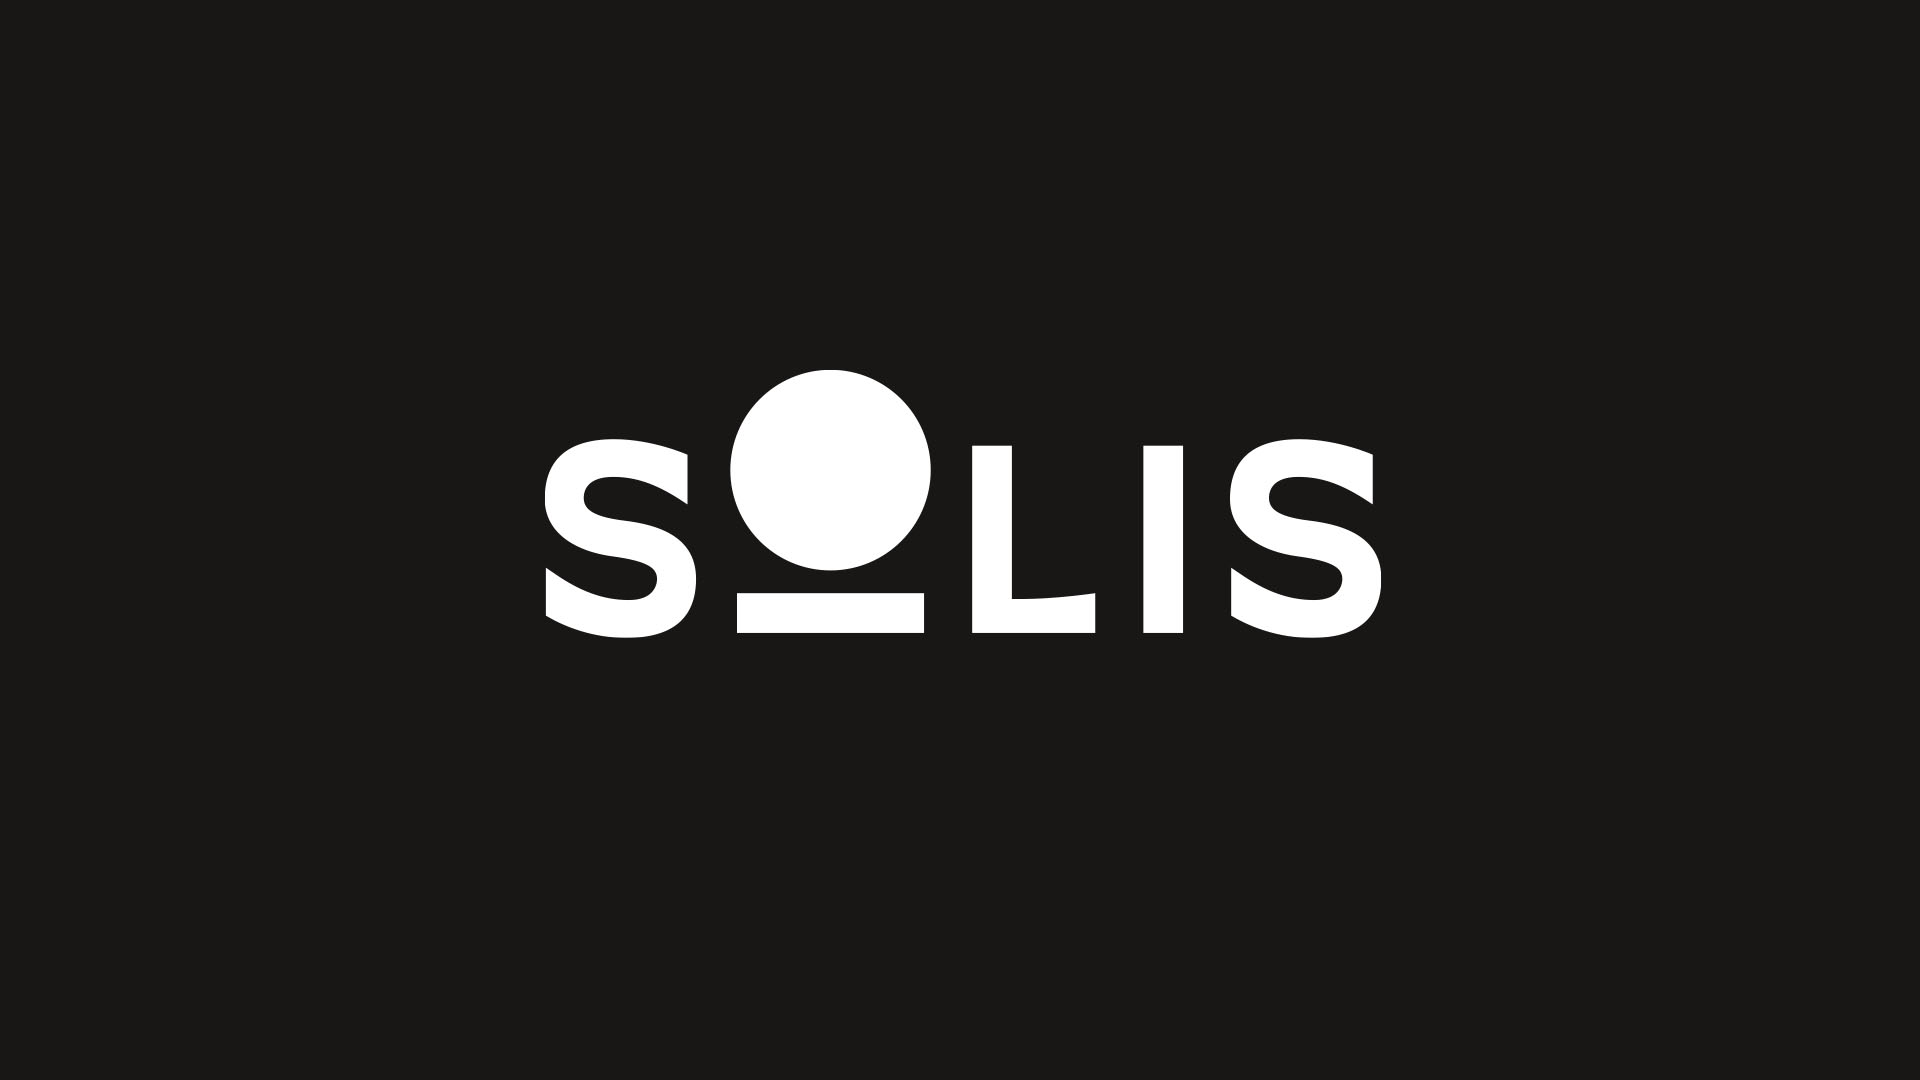 SOLIS